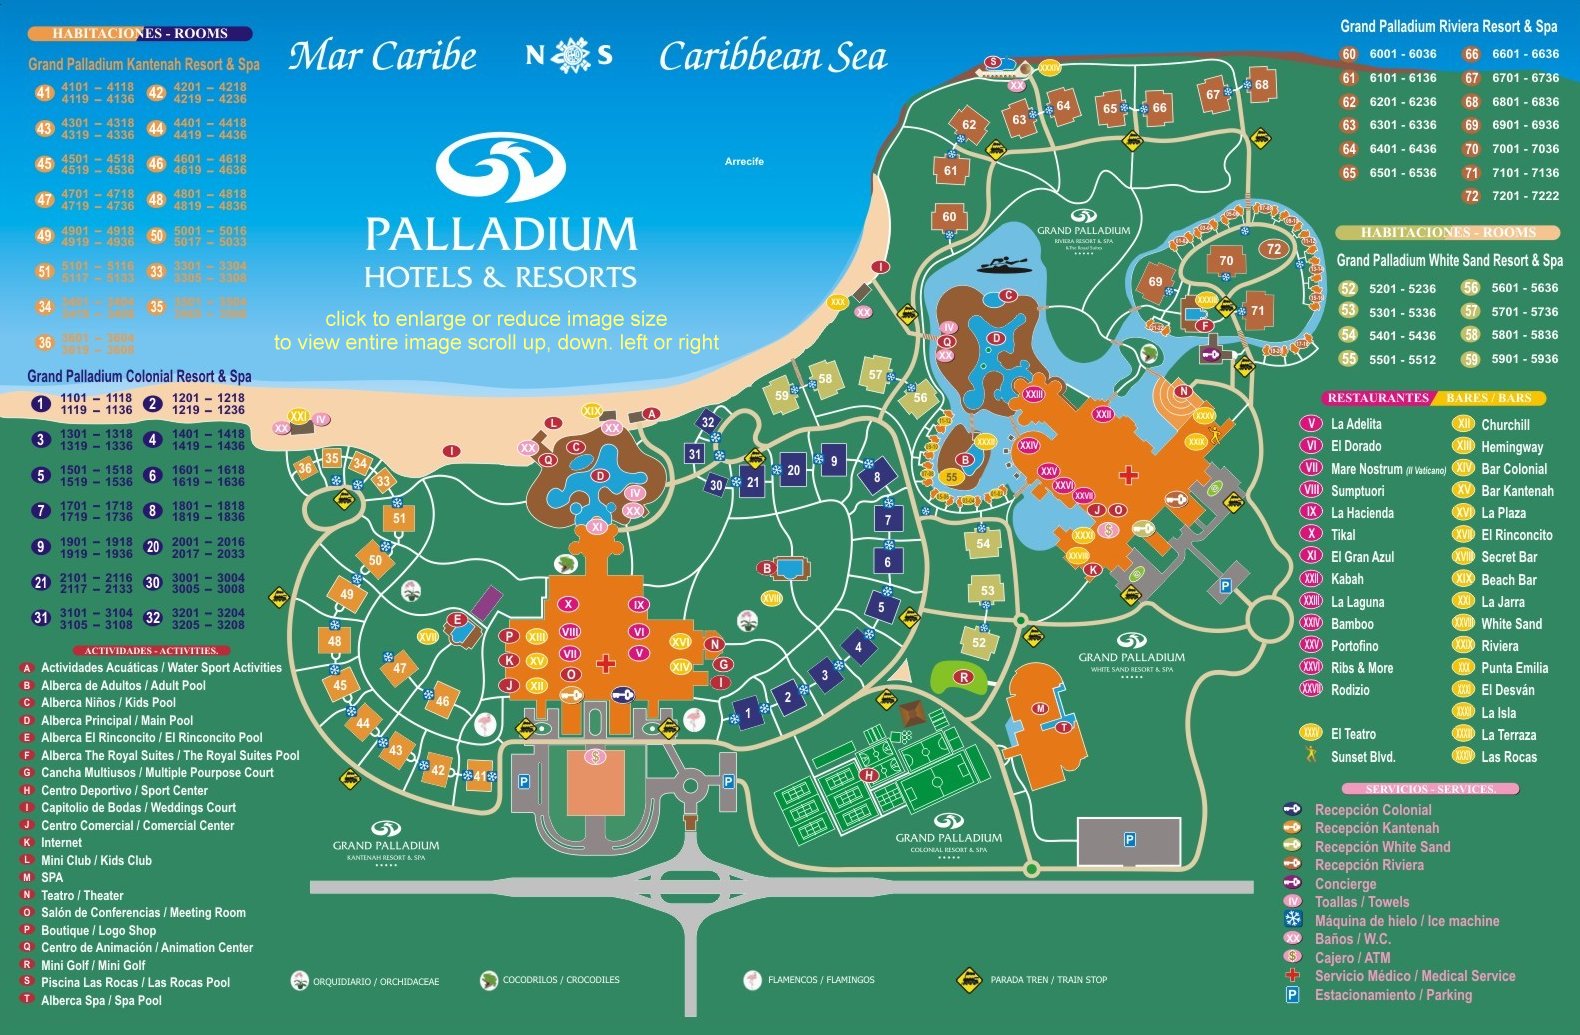 Riviera Maya Grand Palladium Kantenah Resort Map 